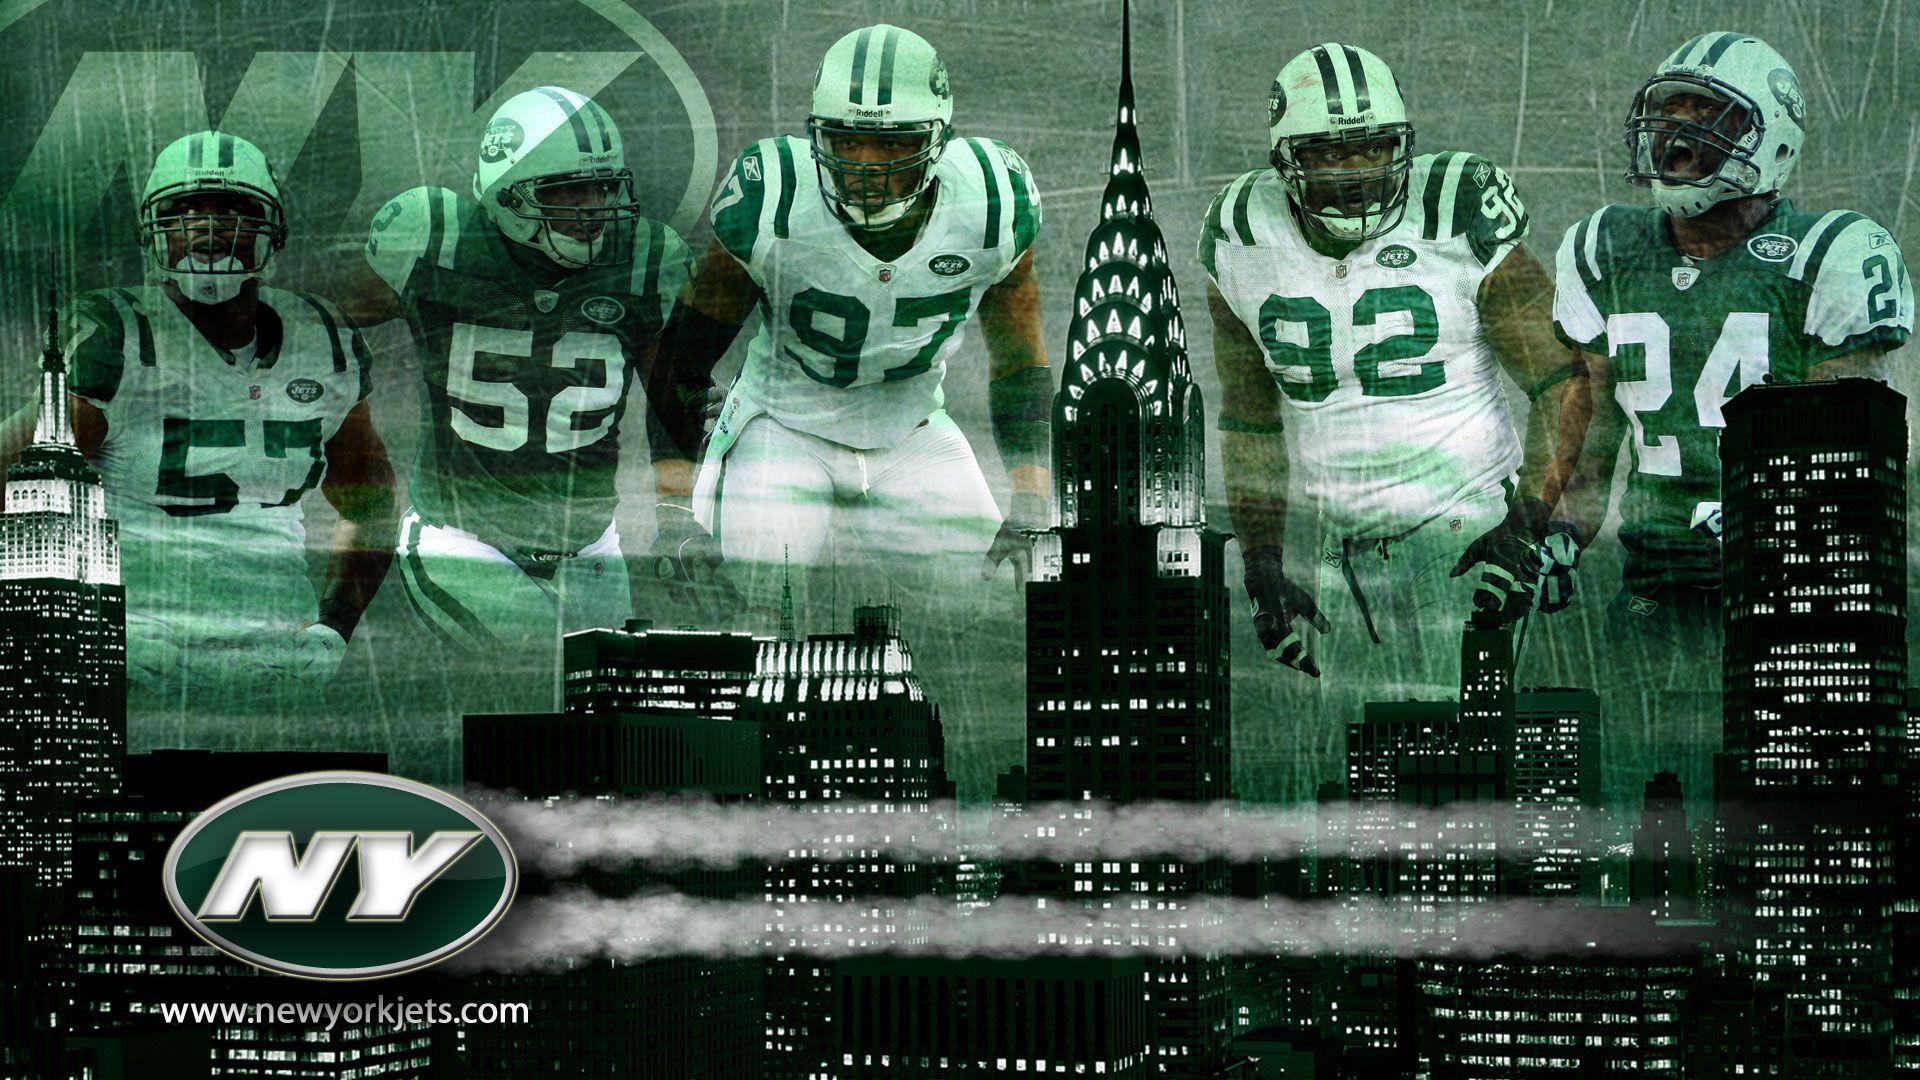 New York Jets Wallpaper iPhone.